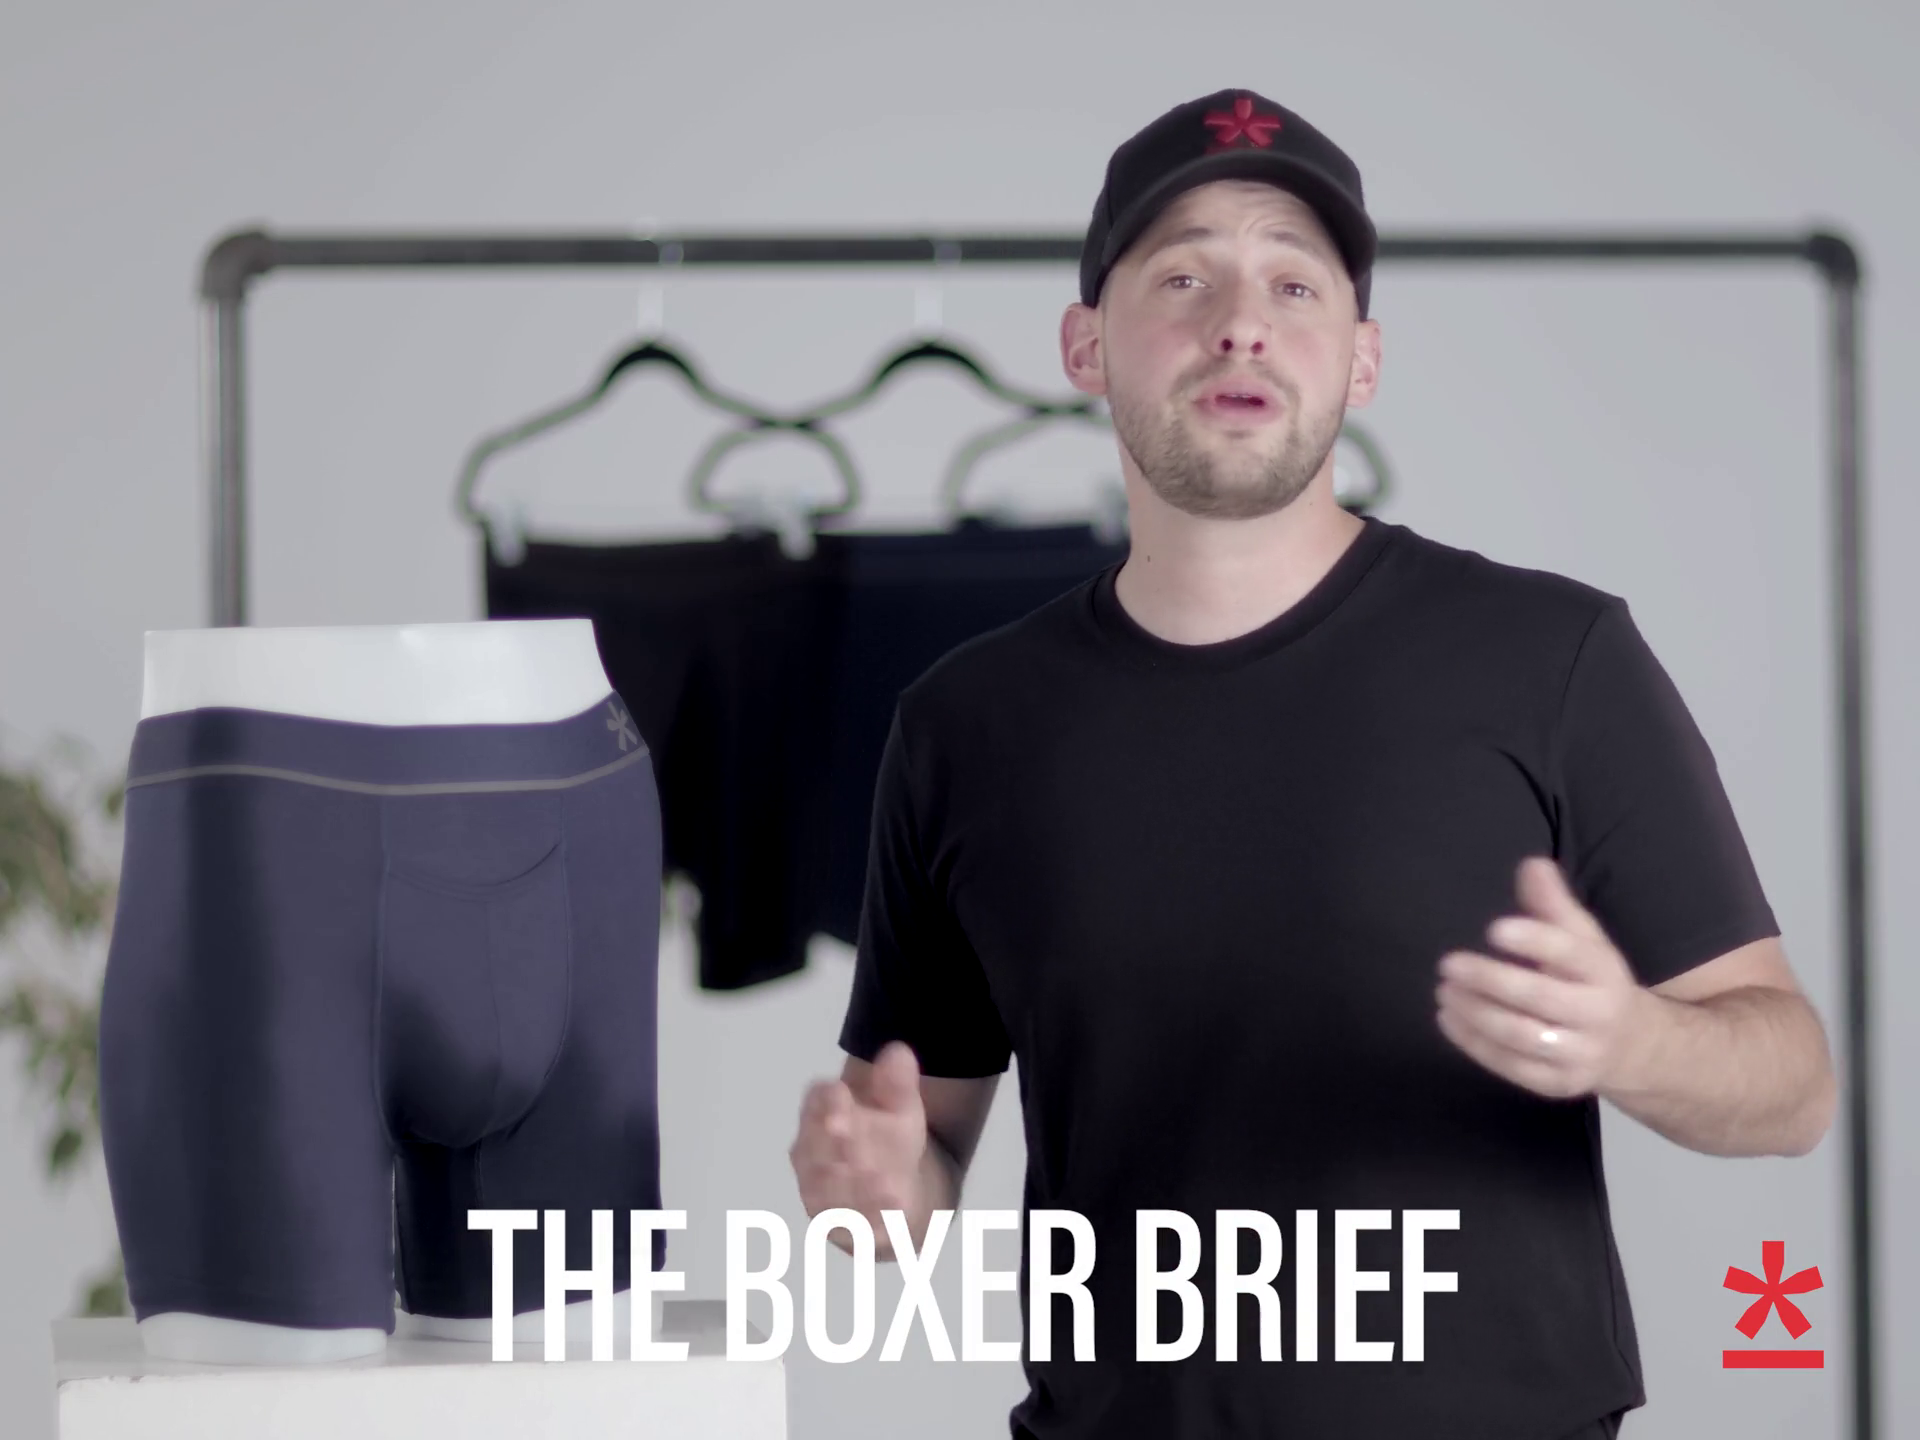 Buy INNERSYMen's Boxer Briefs Cotton Stretchy Underwear 7 Pack for a Week  Online at desertcartSeychelles